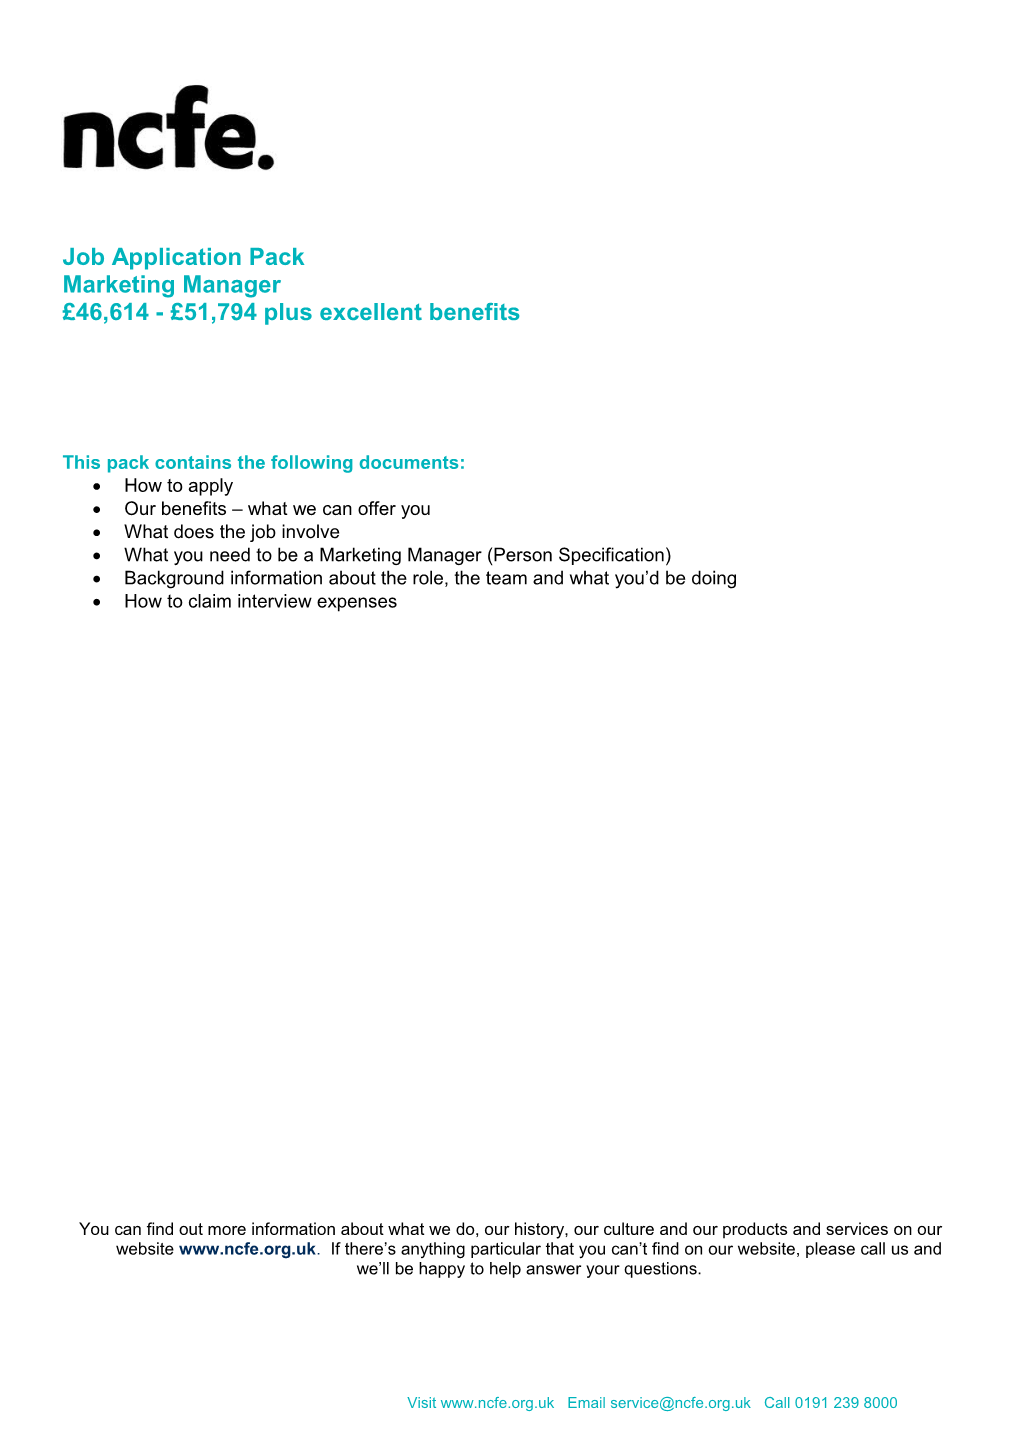 Job Application Pack s1